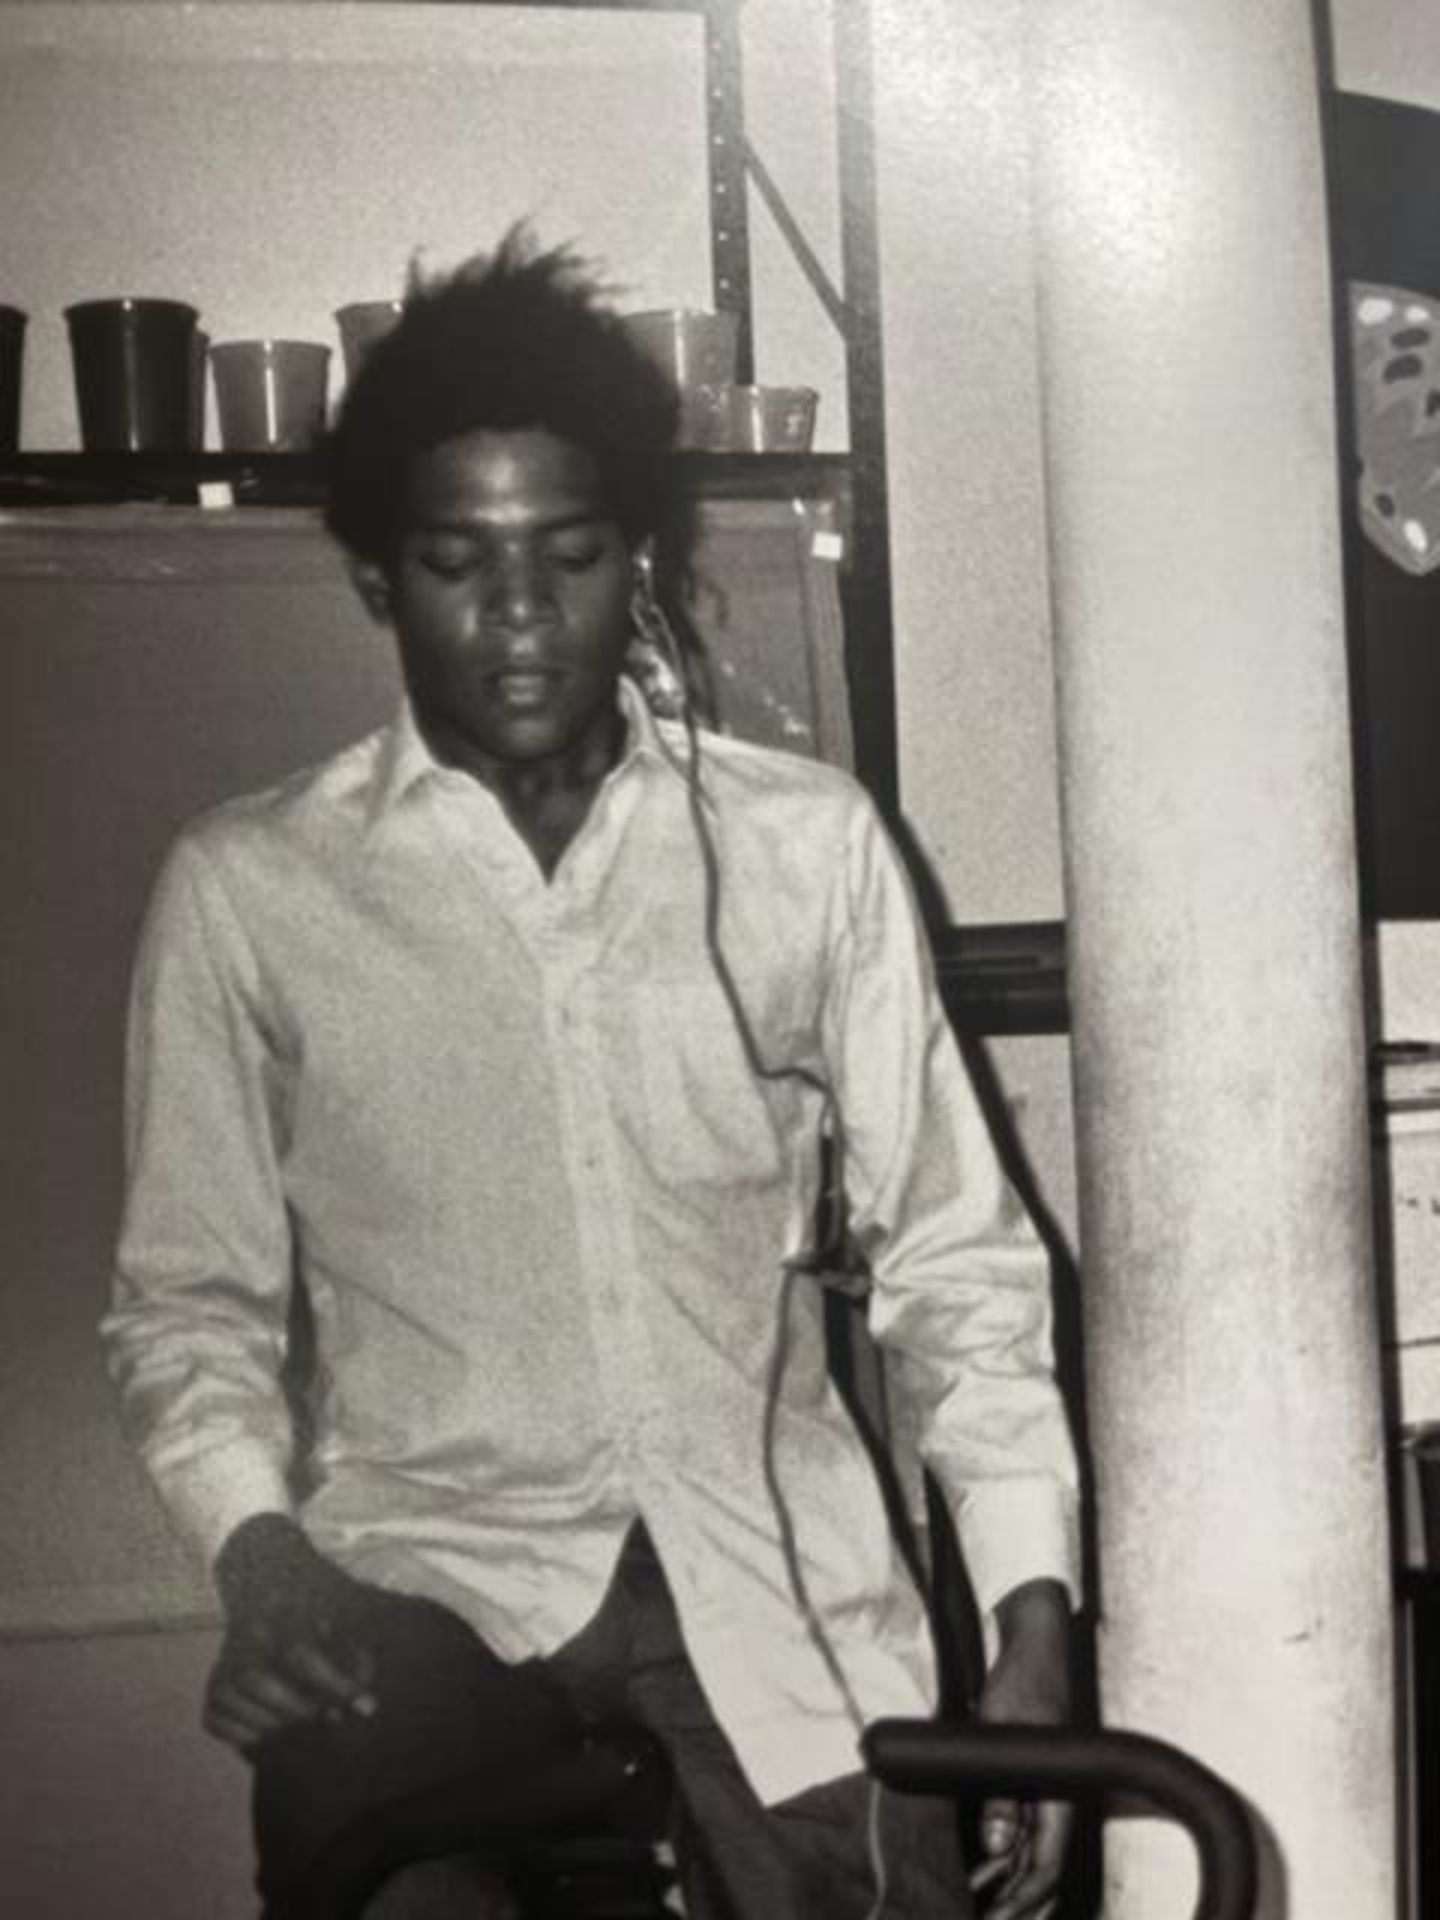 Jean-Michel Basquiat "Untitled" Print. - Image 2 of 6